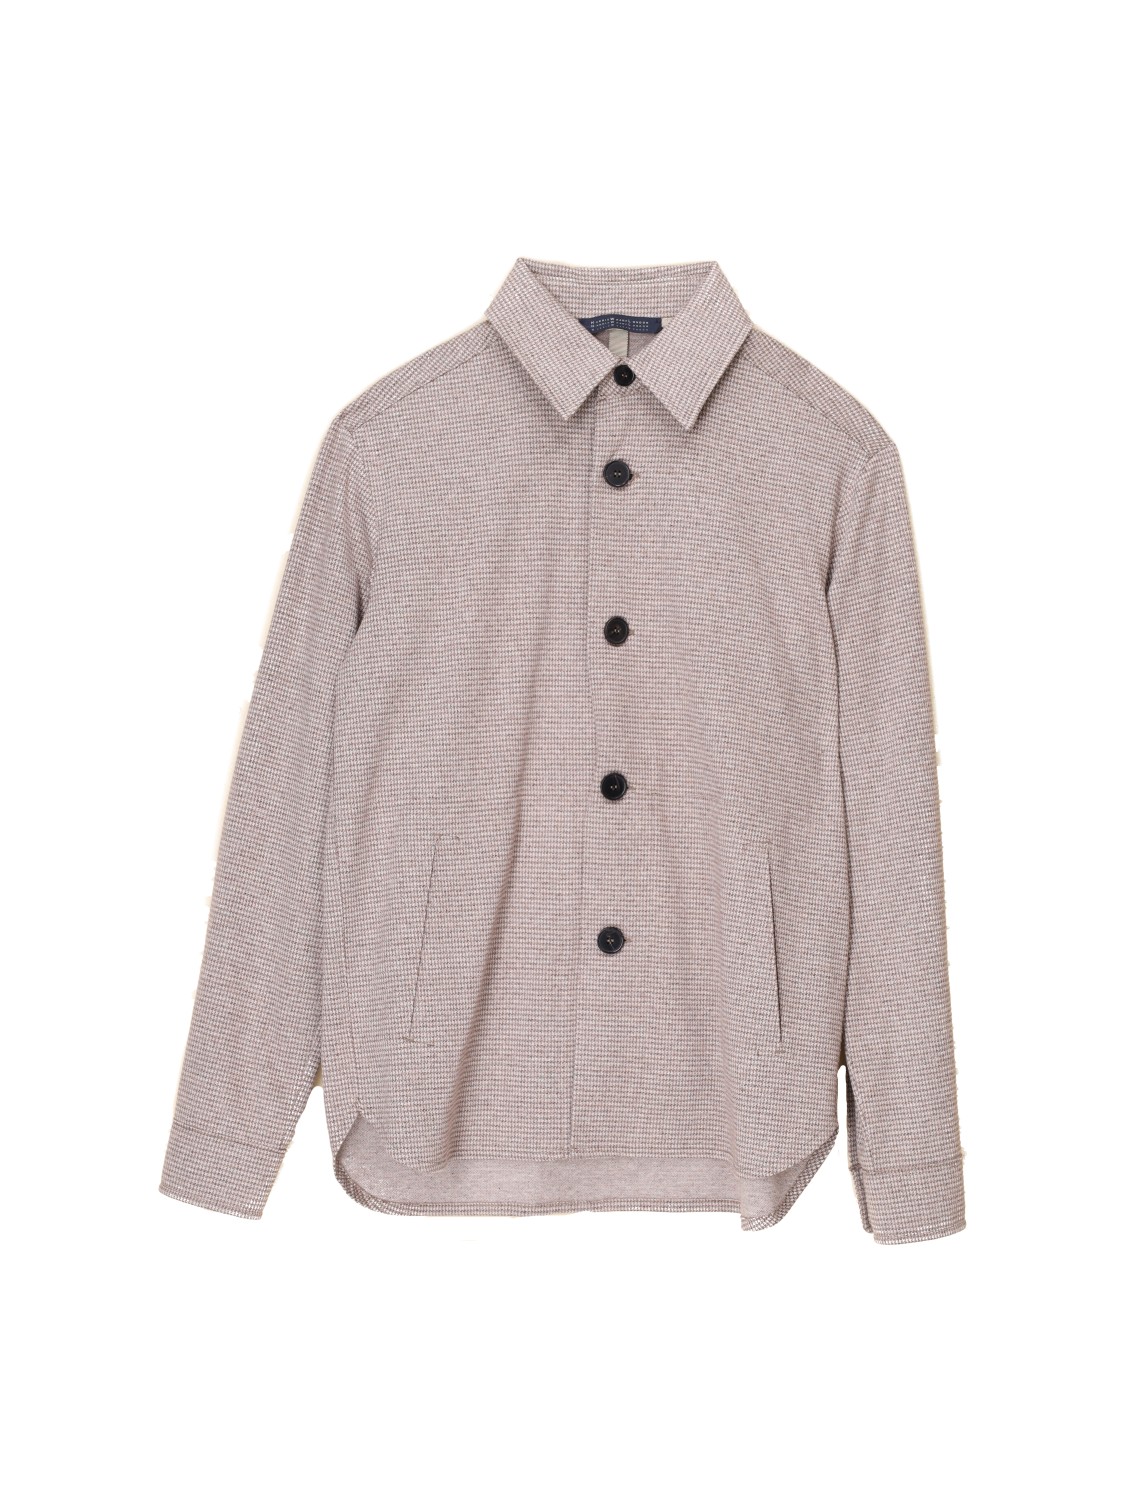 Patterned - Cotton shirt jacket 